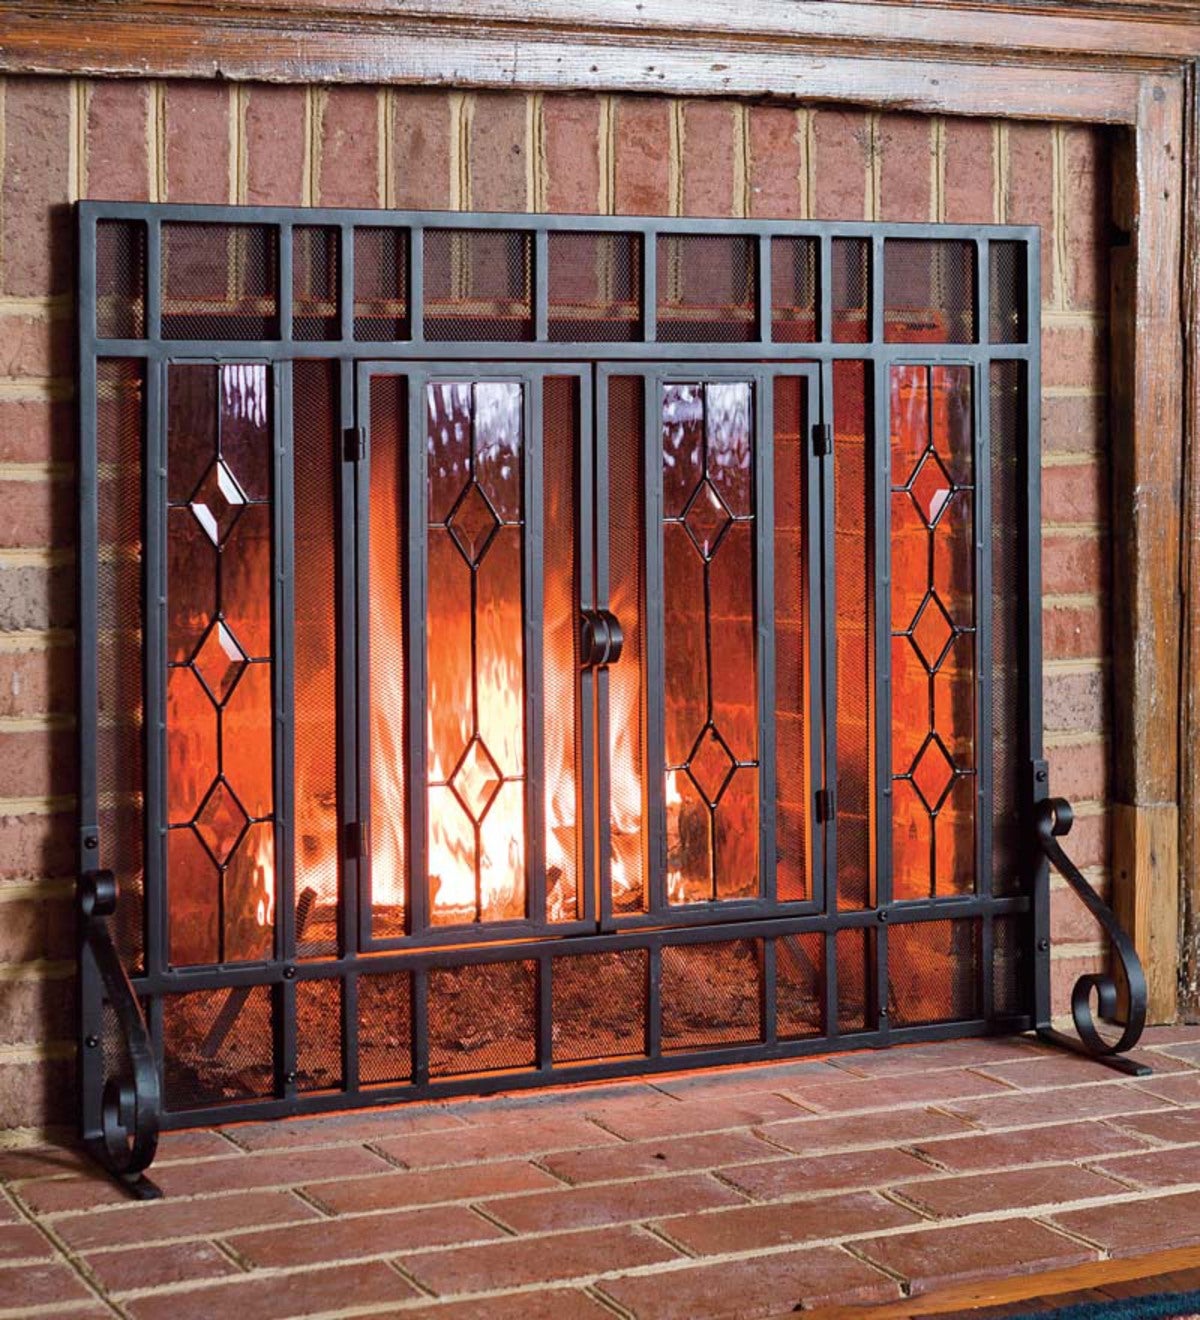 38"W x 31"H Beveled Glass Diamond Fireplace Screen With Powder-Coated Tubular Steel Frame